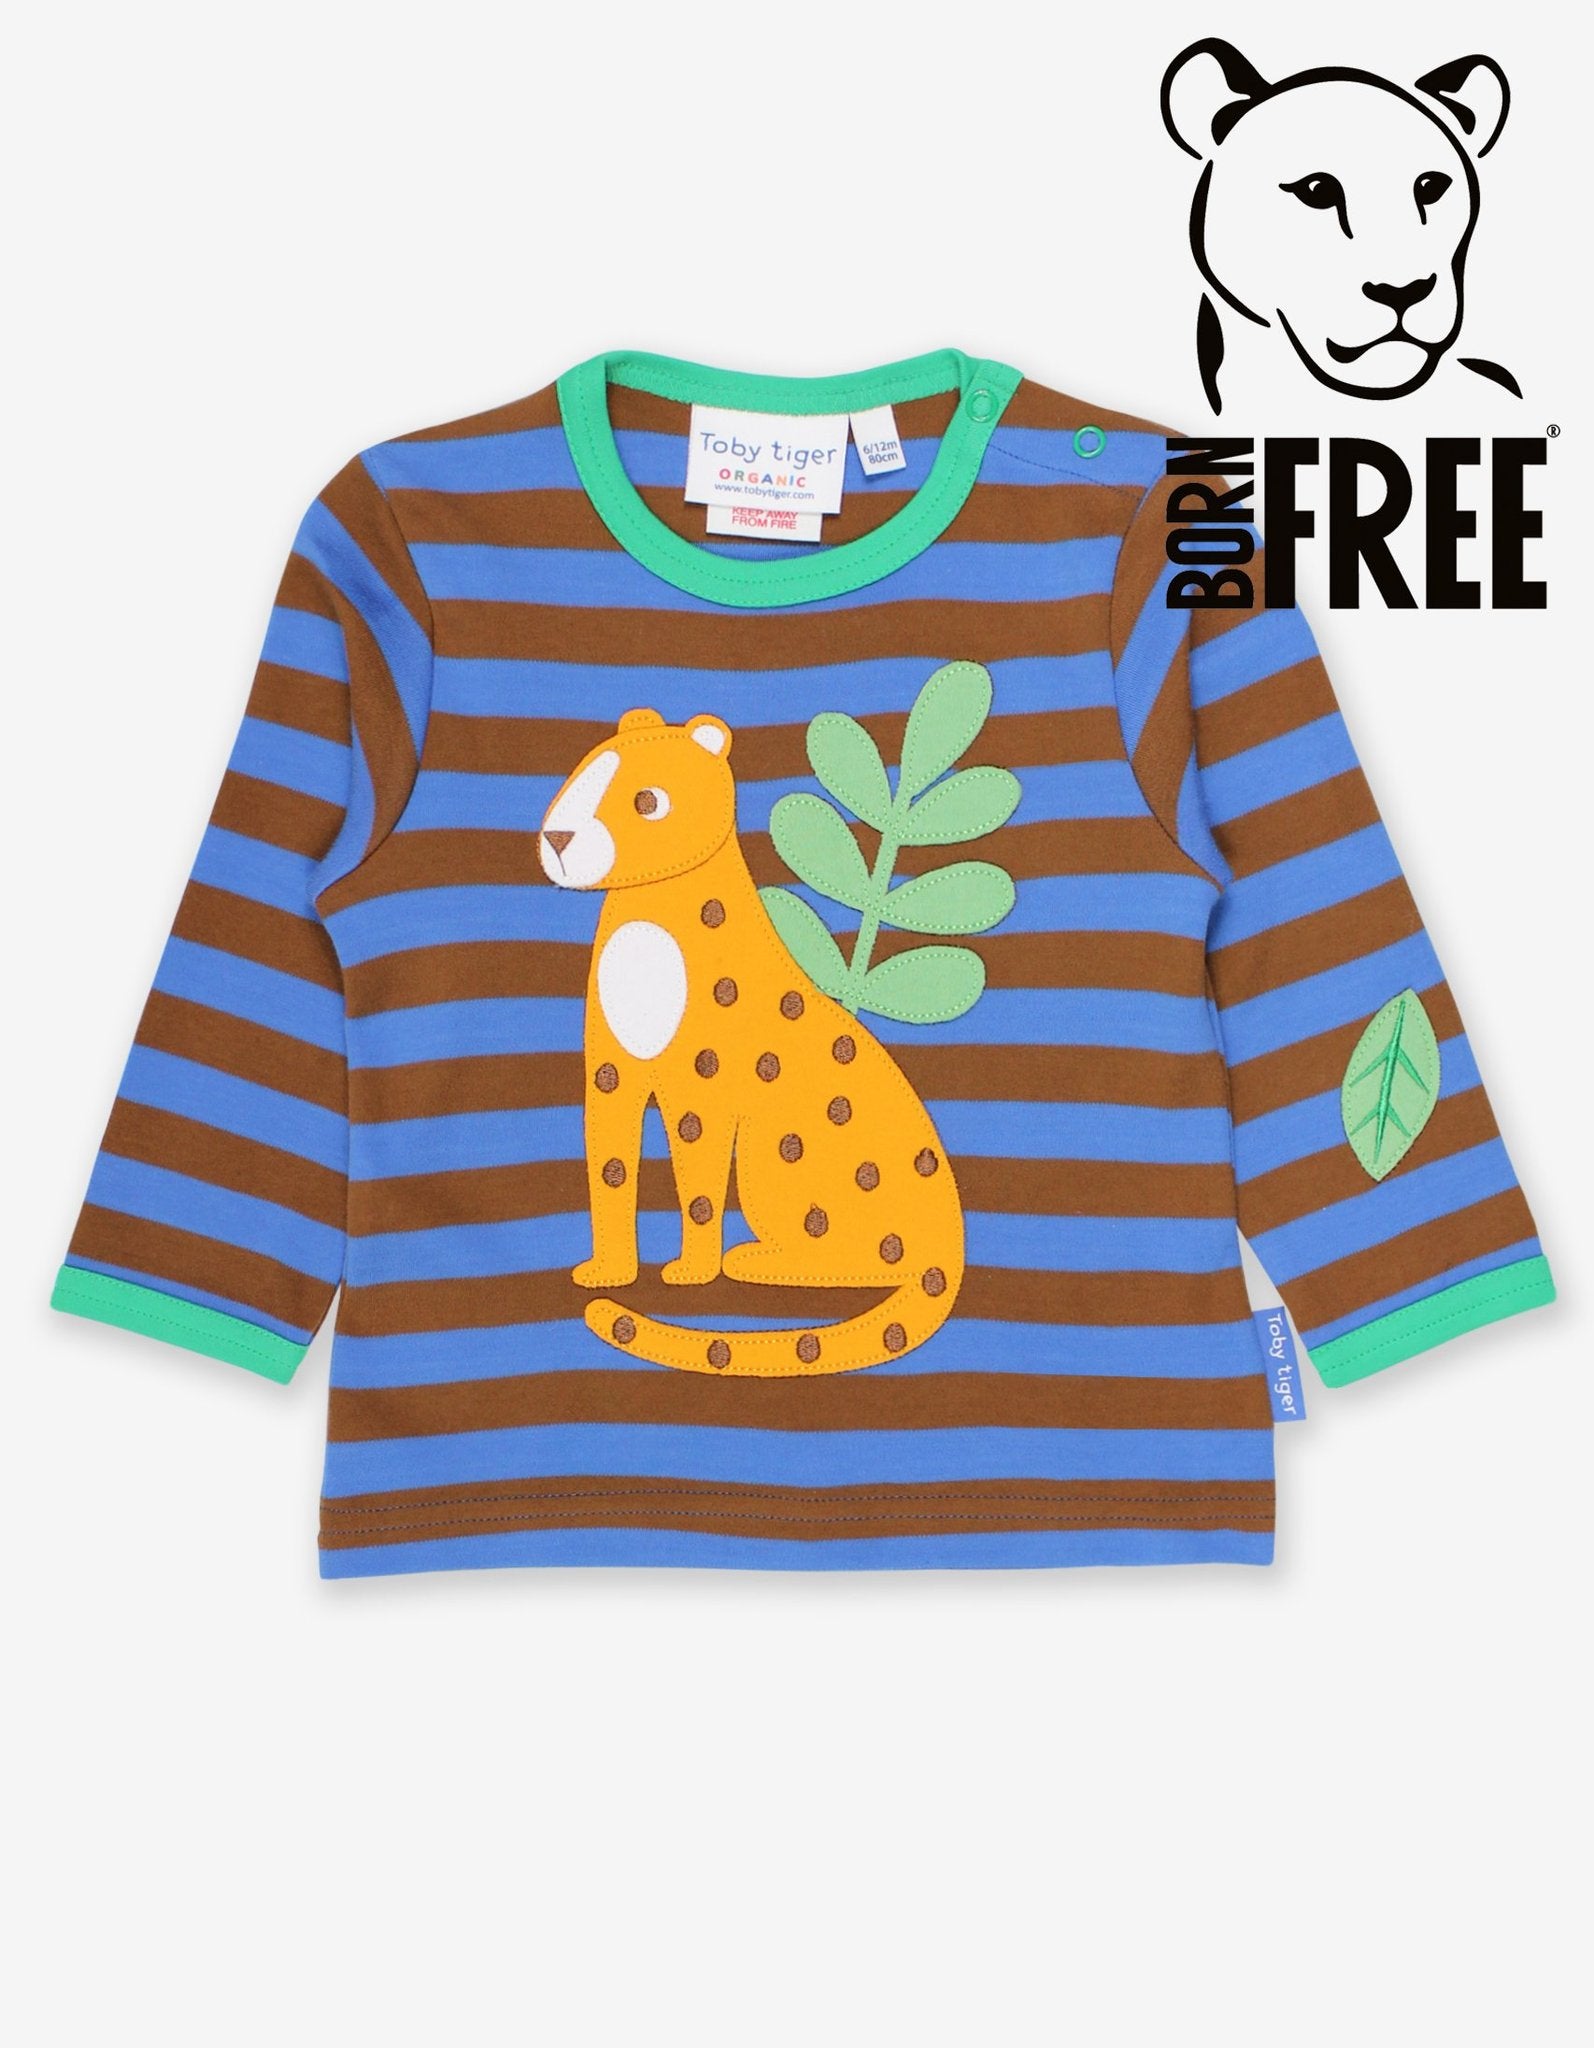 Toby Tiger Blue Striped Leopard Born Free Charity T-shirt